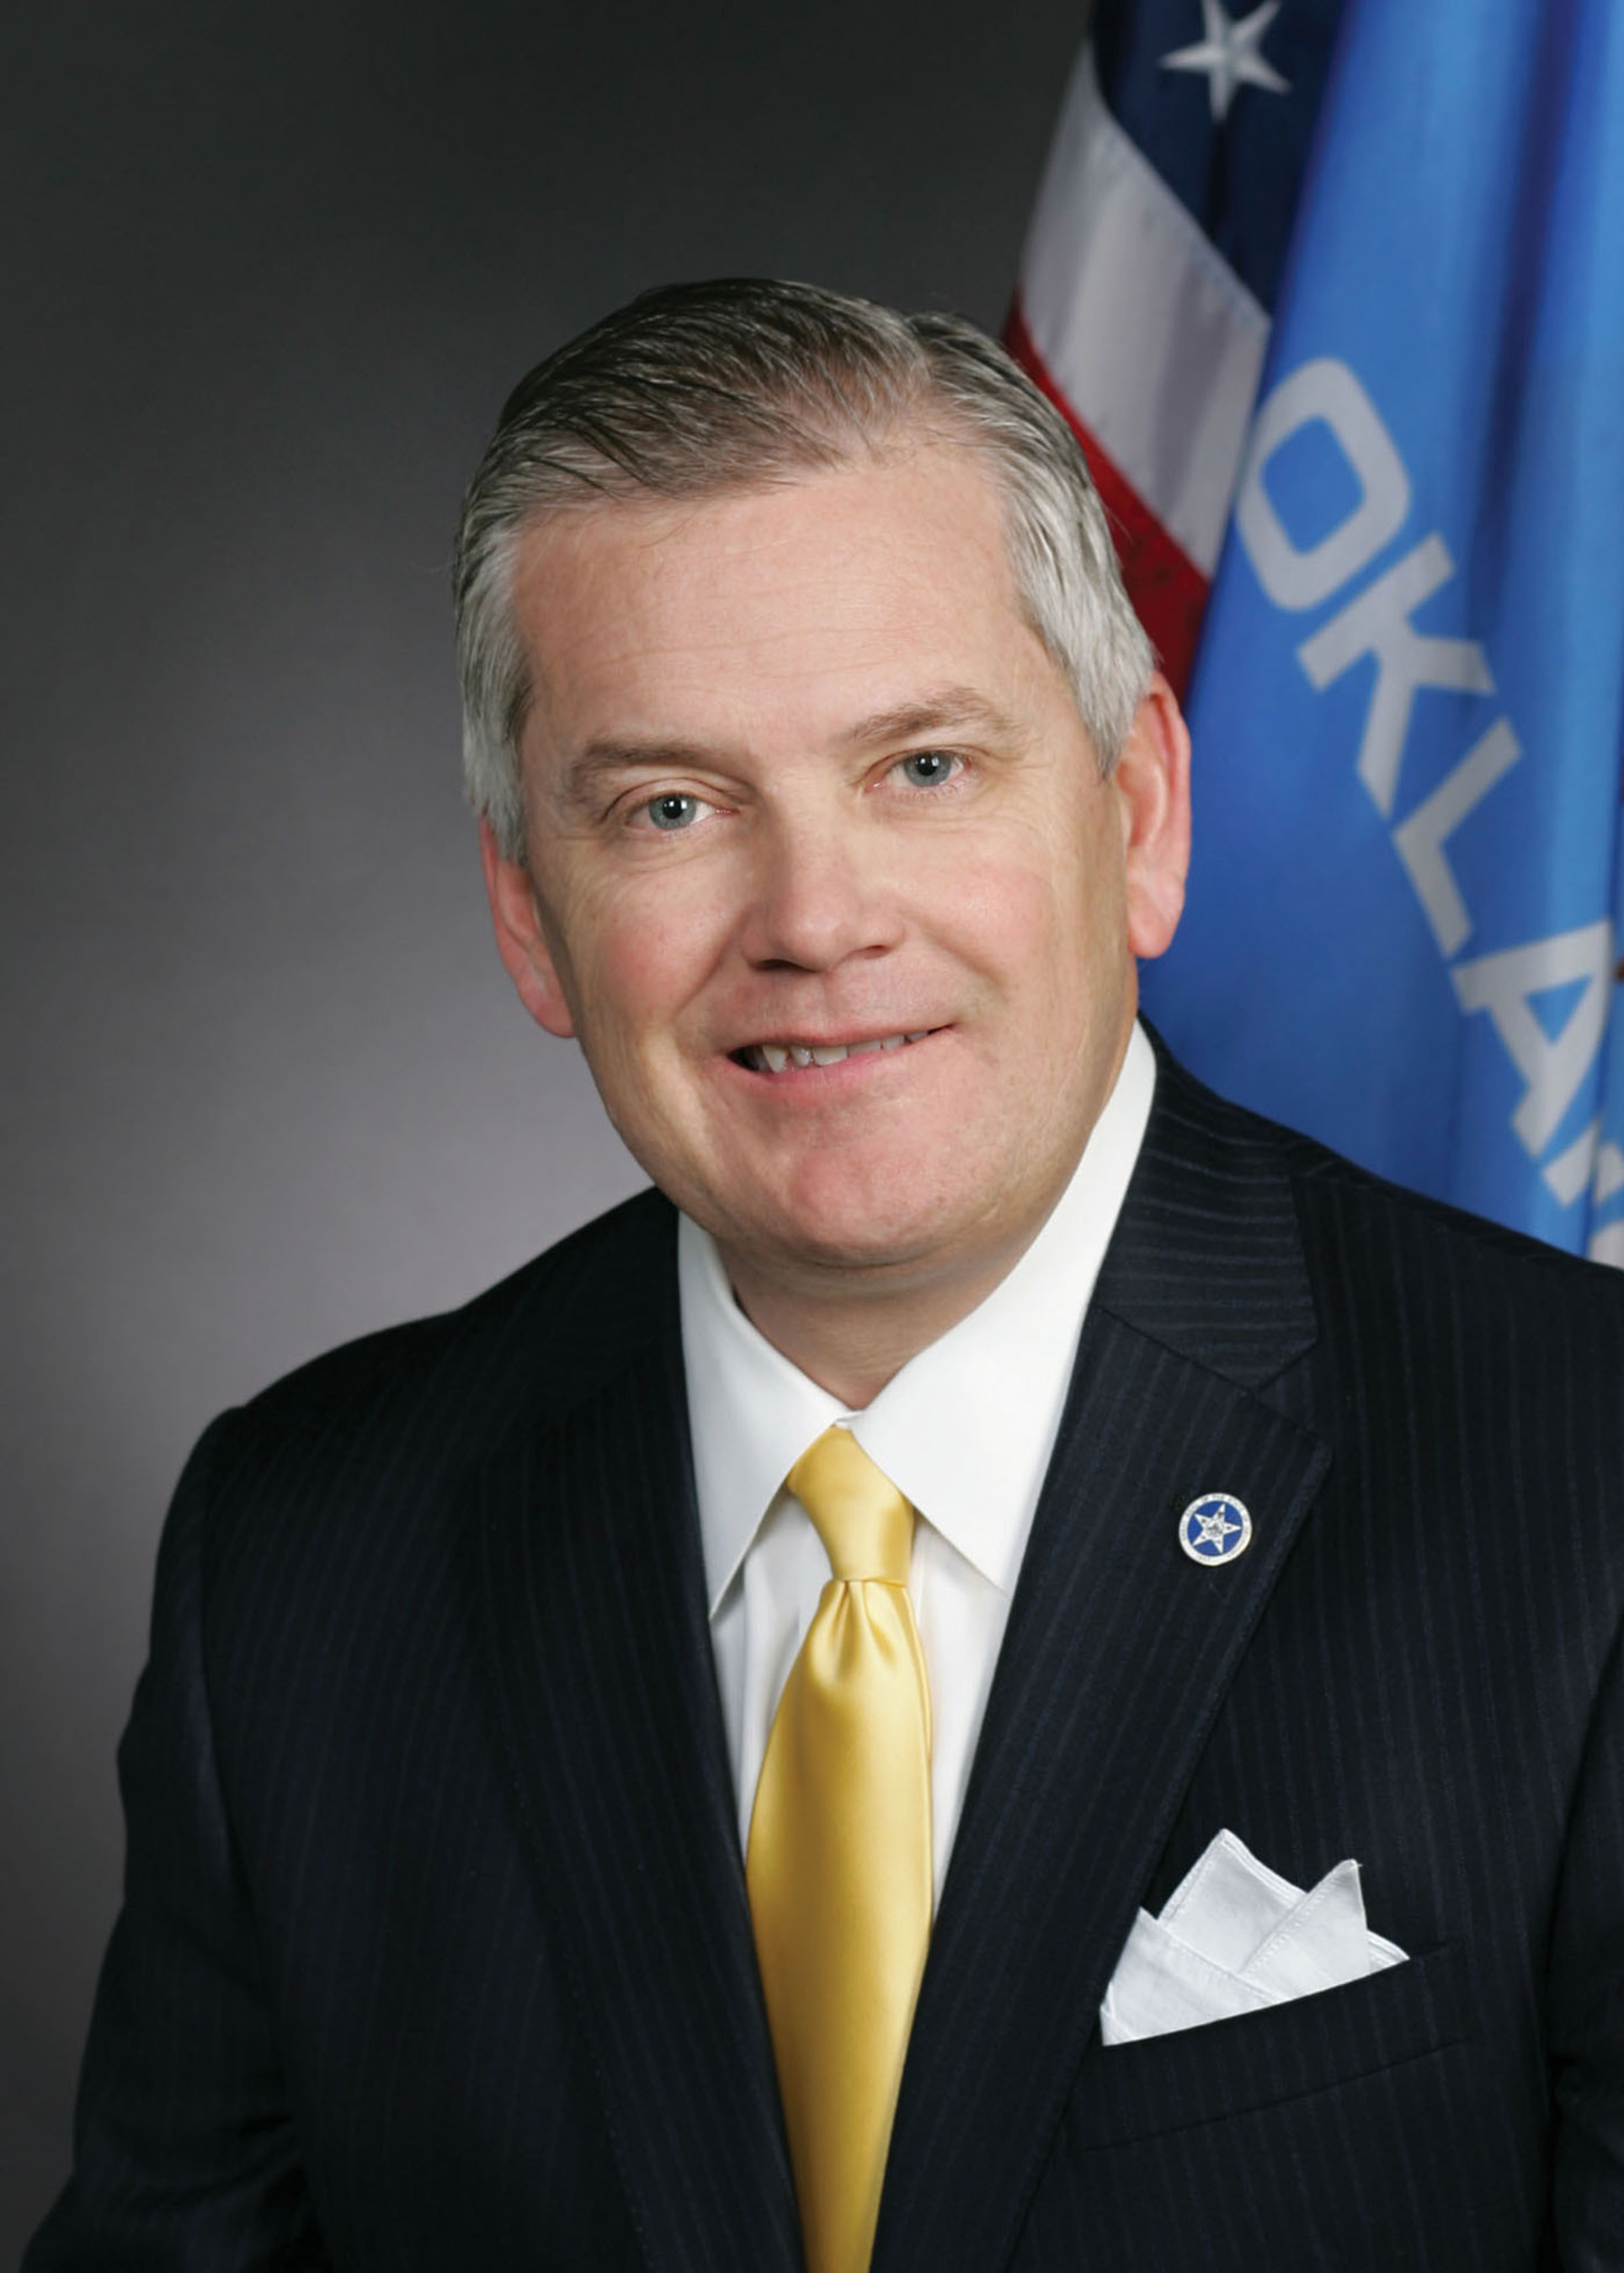 Oklahoma Insurance Commissioner John D. Doak. (PRNewsFoto/Oklahoma Insurance Department) (PRNewsFoto/)